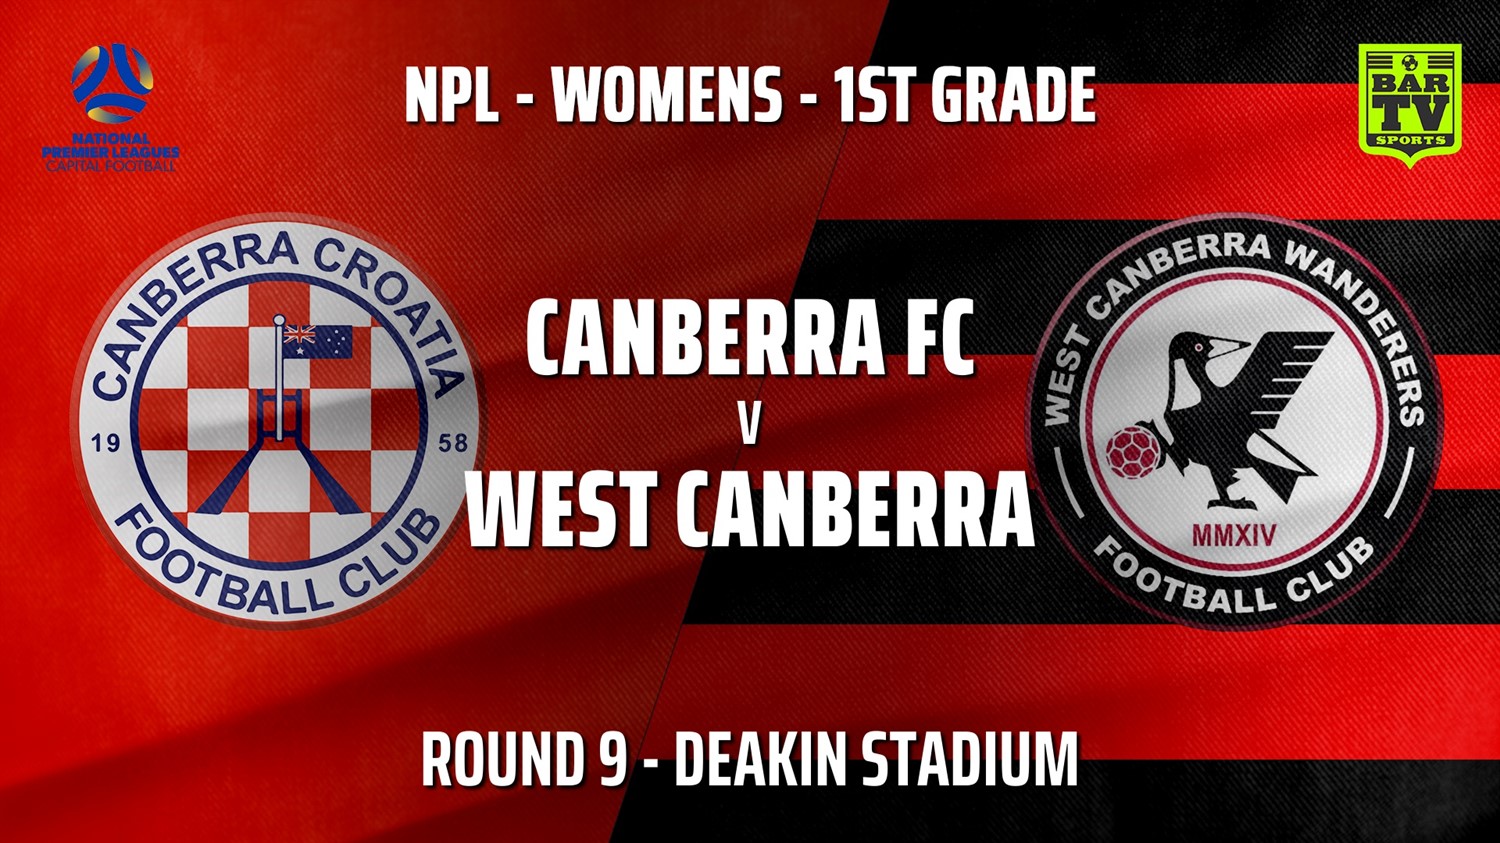 210613-Capital Womens Round 9 - Canberra FC (women) v West Canberra Wanderers FC (women) Minigame Slate Image